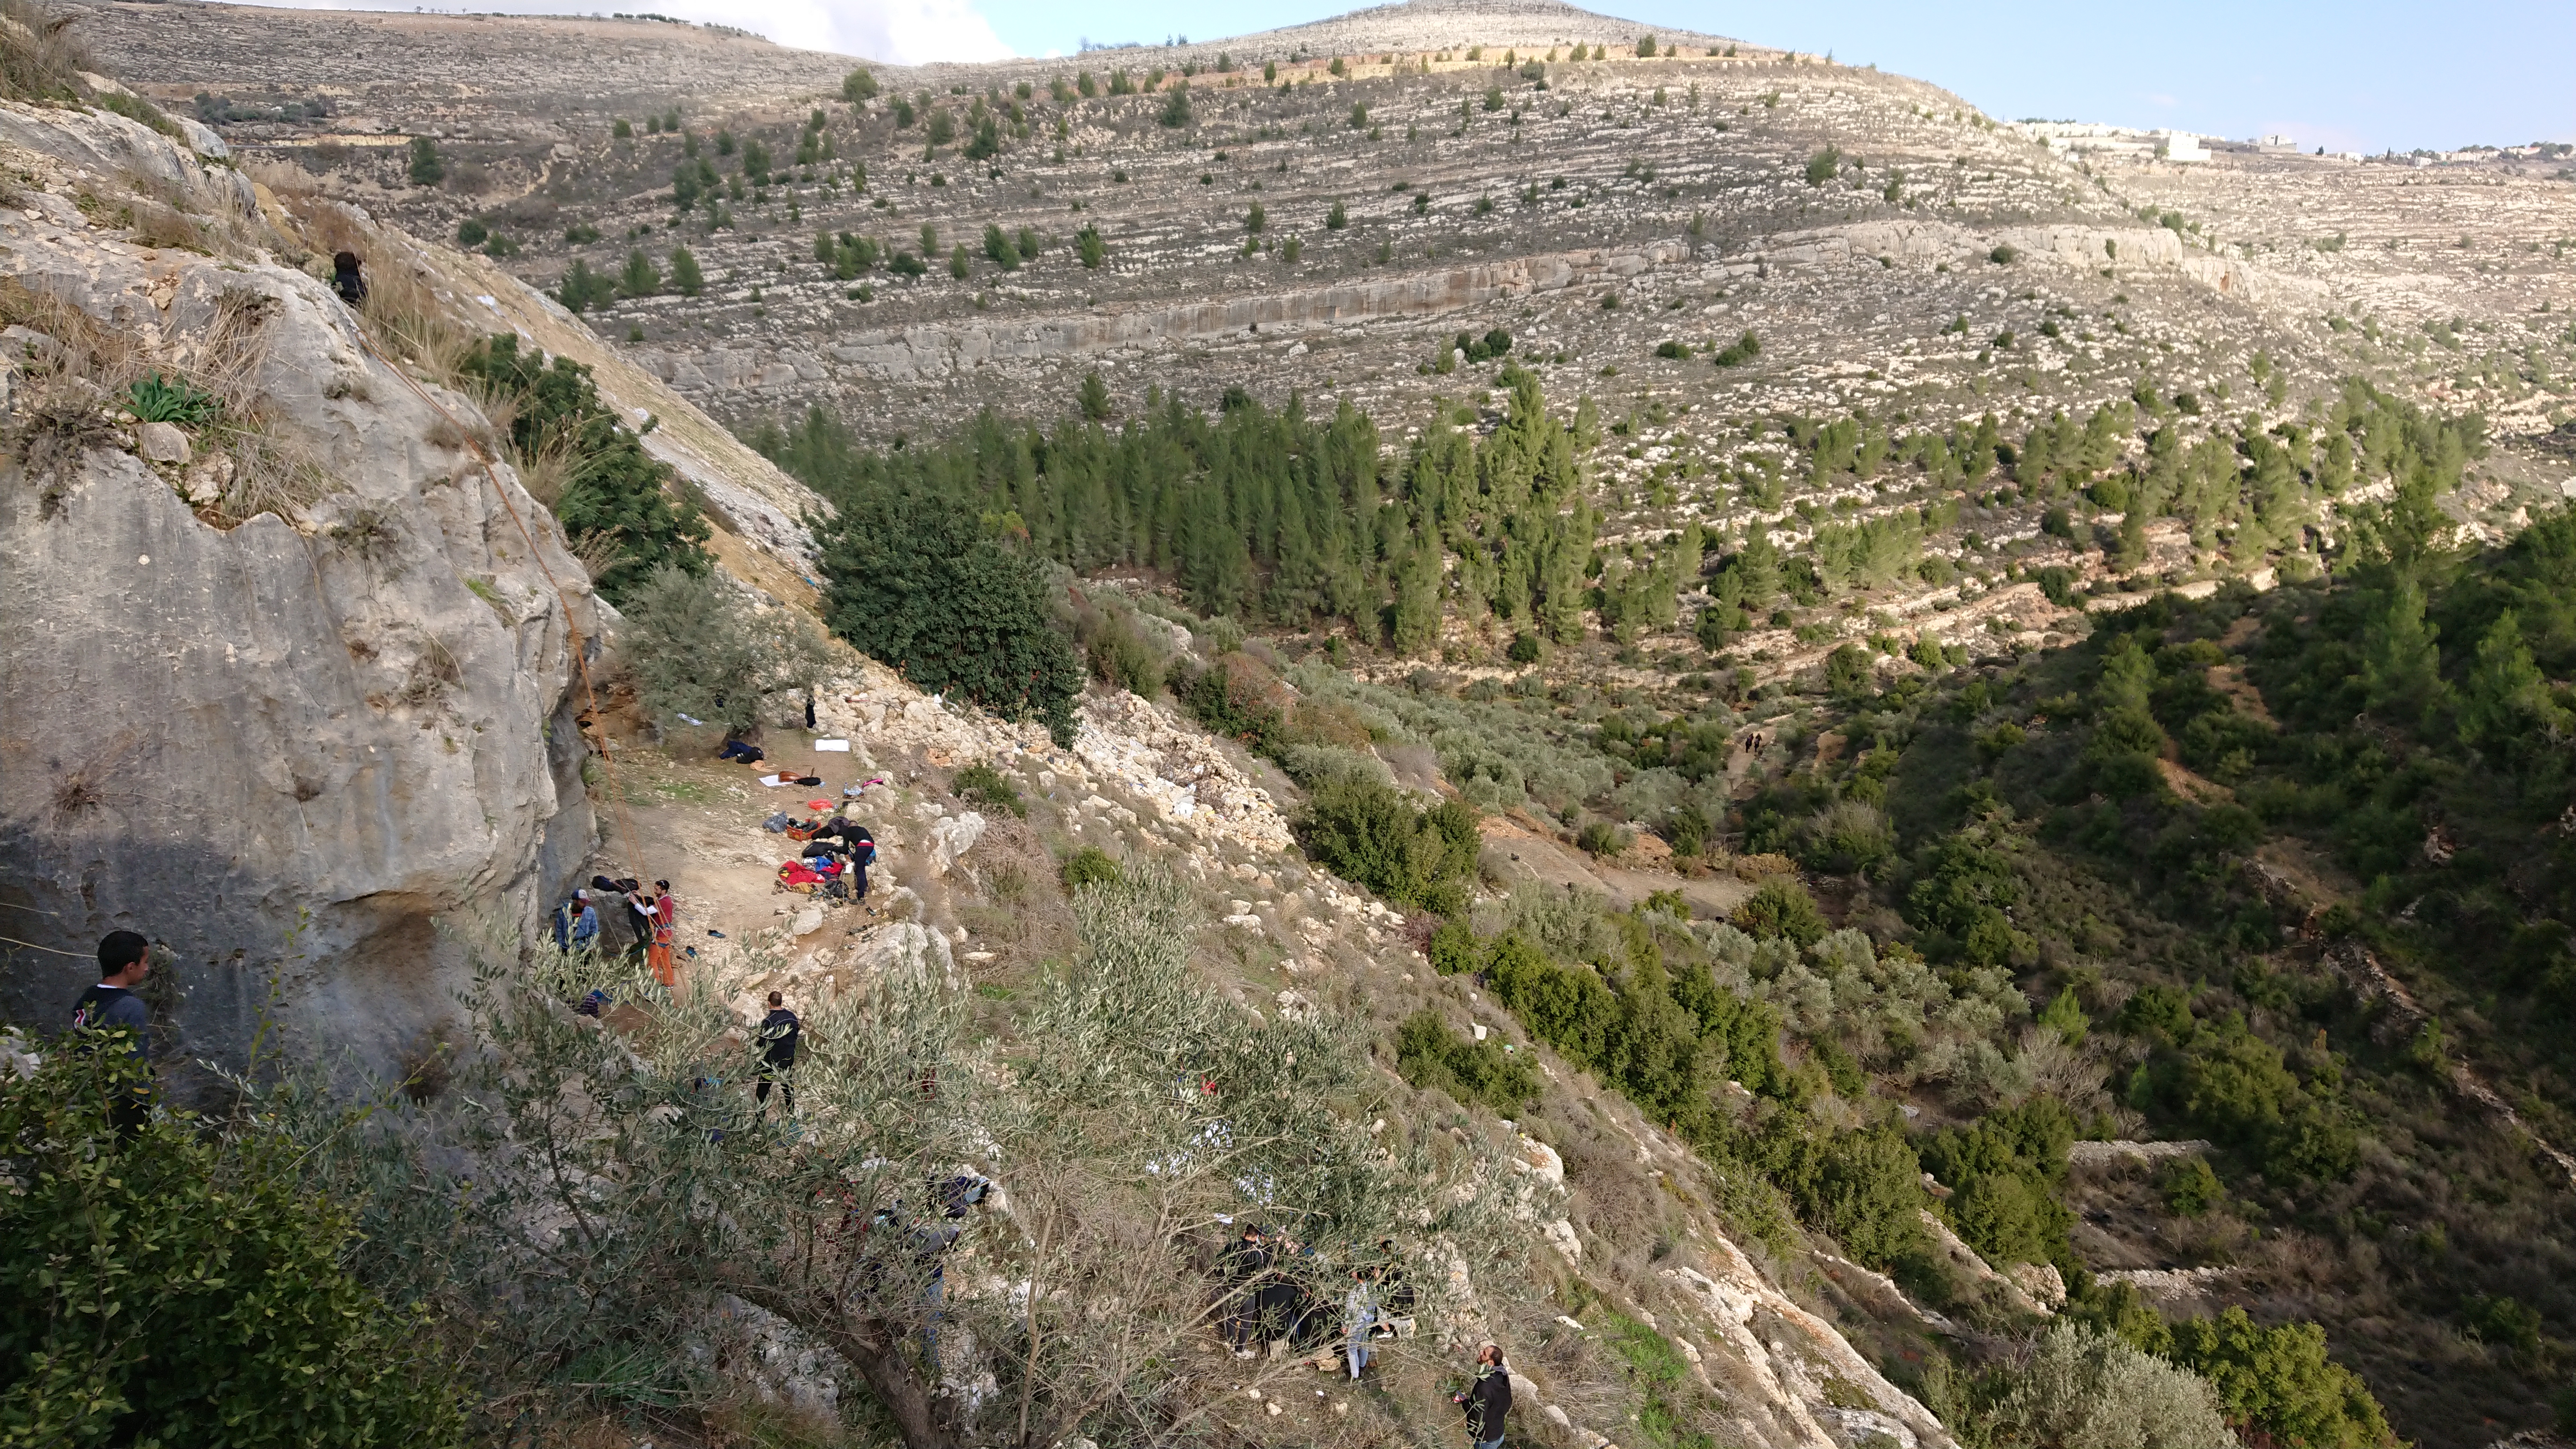 Climbing free in Battir